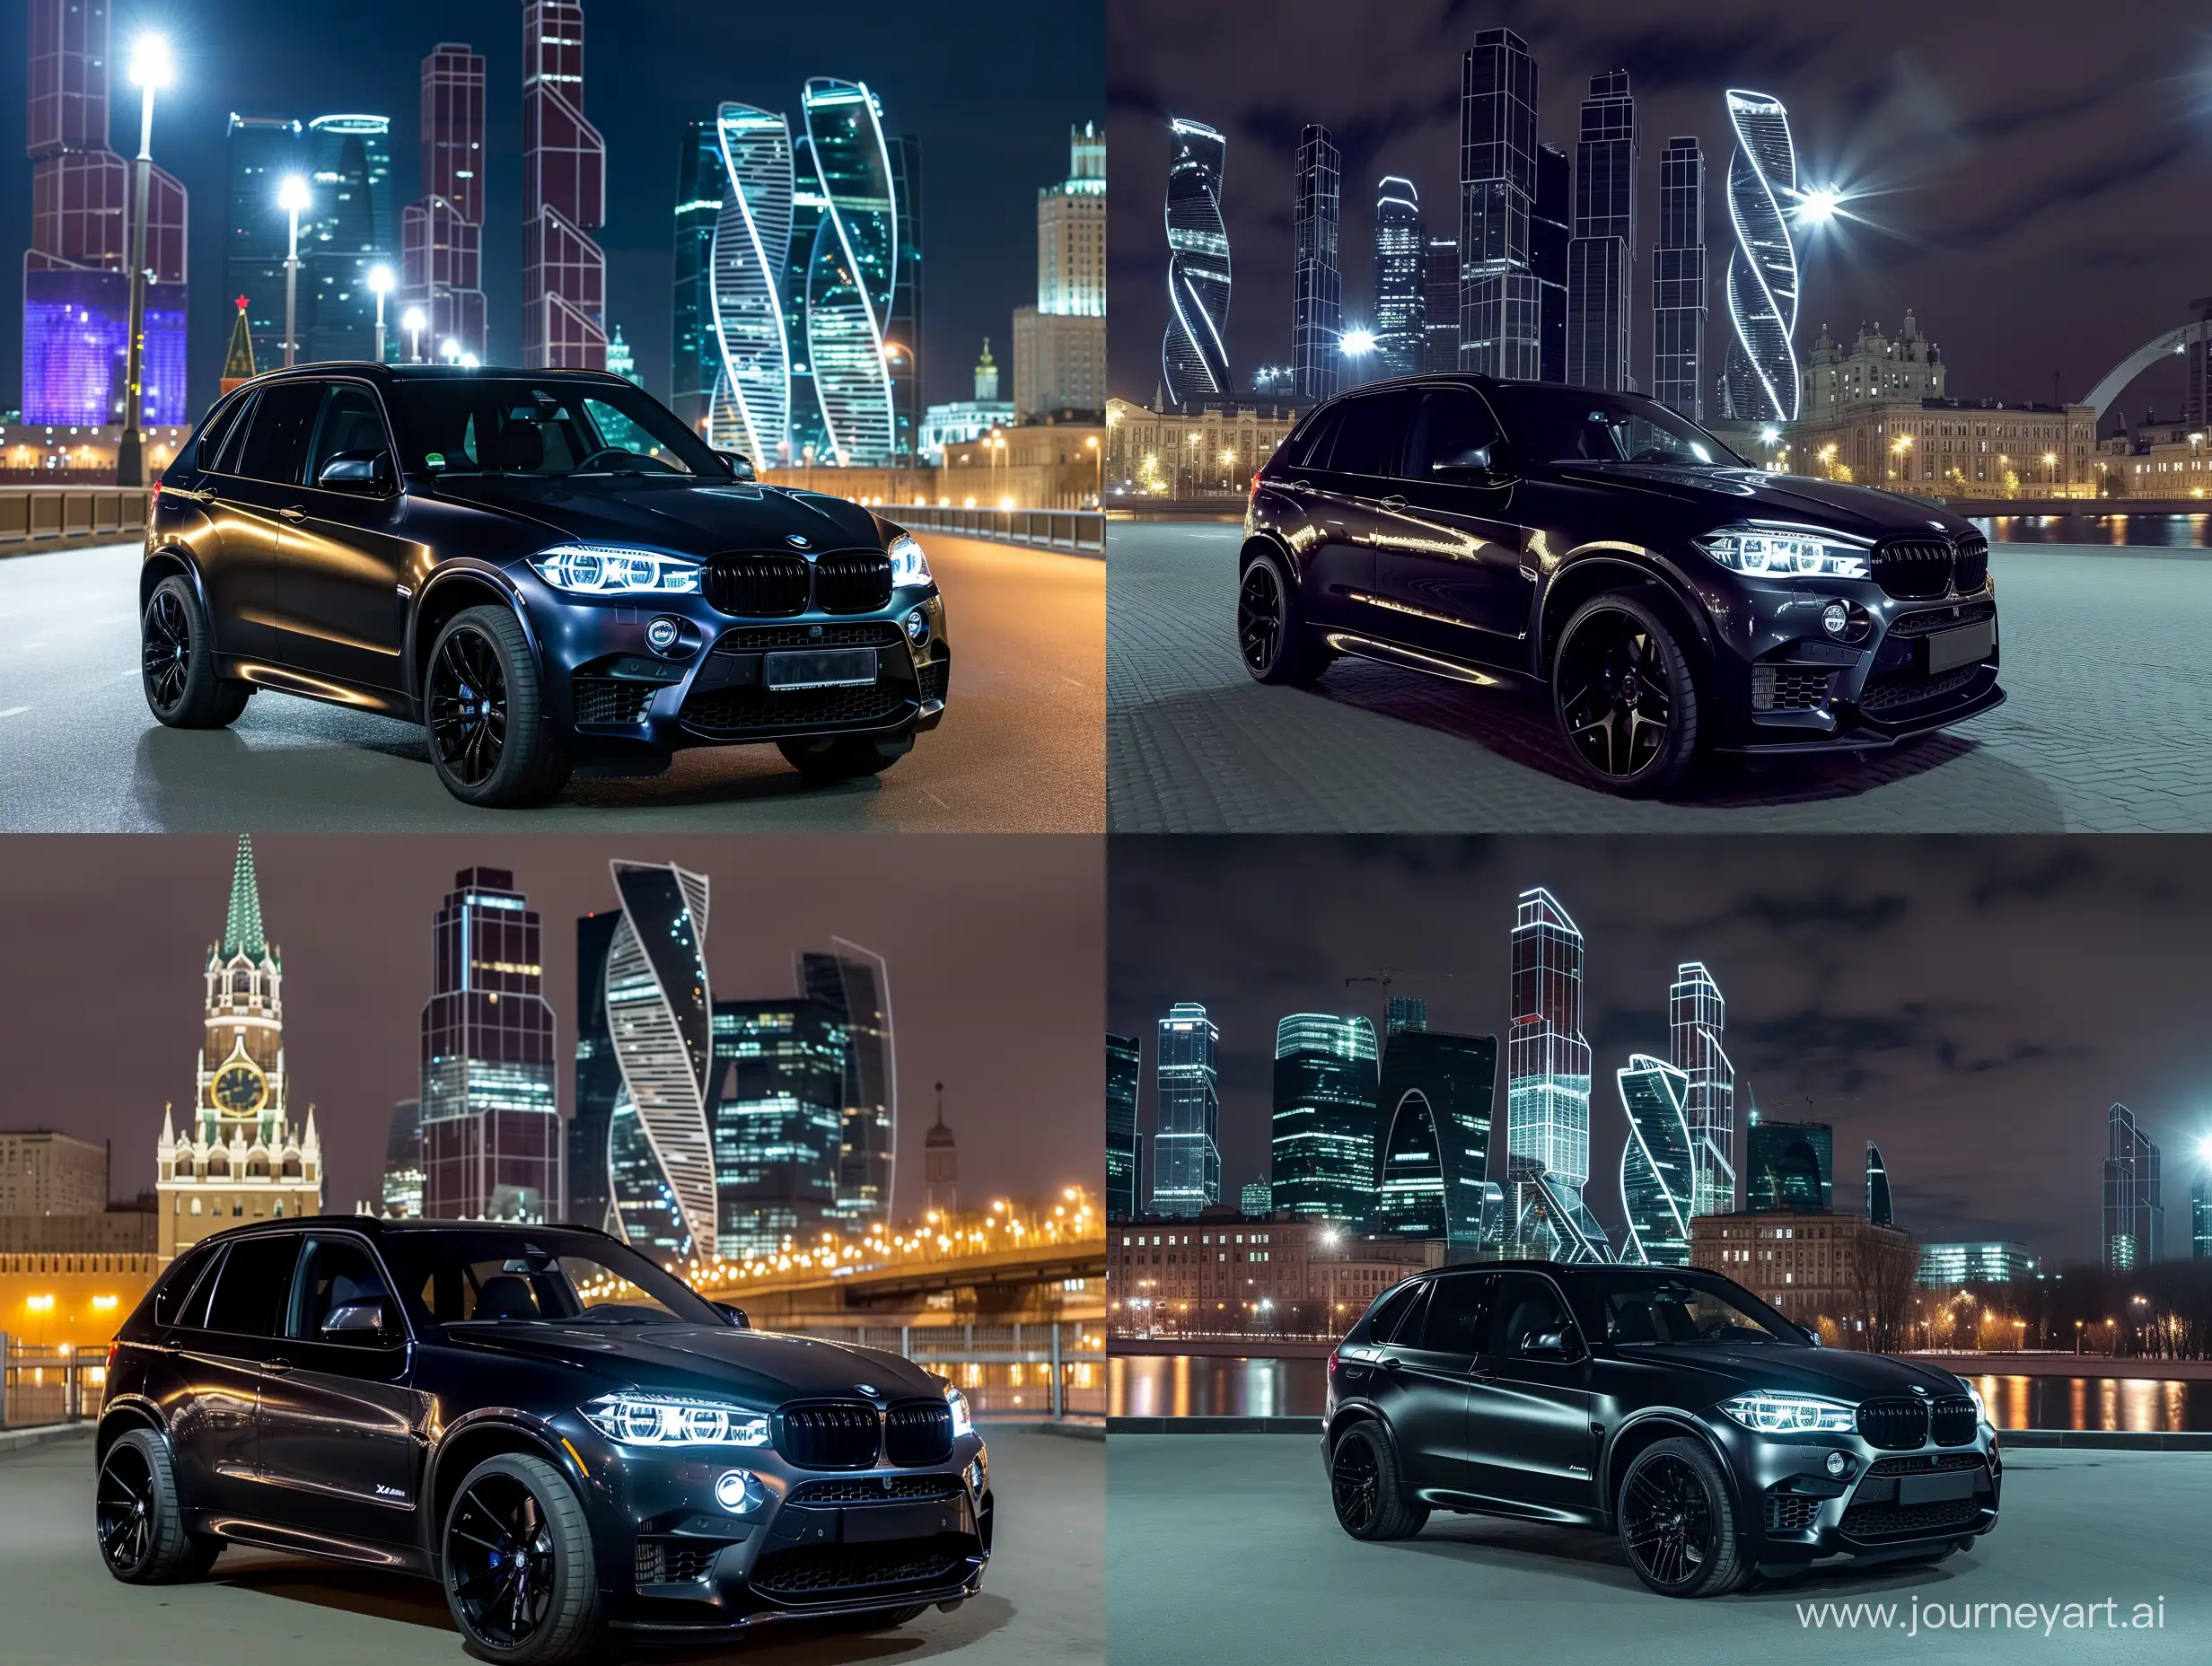 Luxurious-BMW-X5M-Black-Car-in-Moscow-City-Night-8K-Ultra-HD-Wallpaper